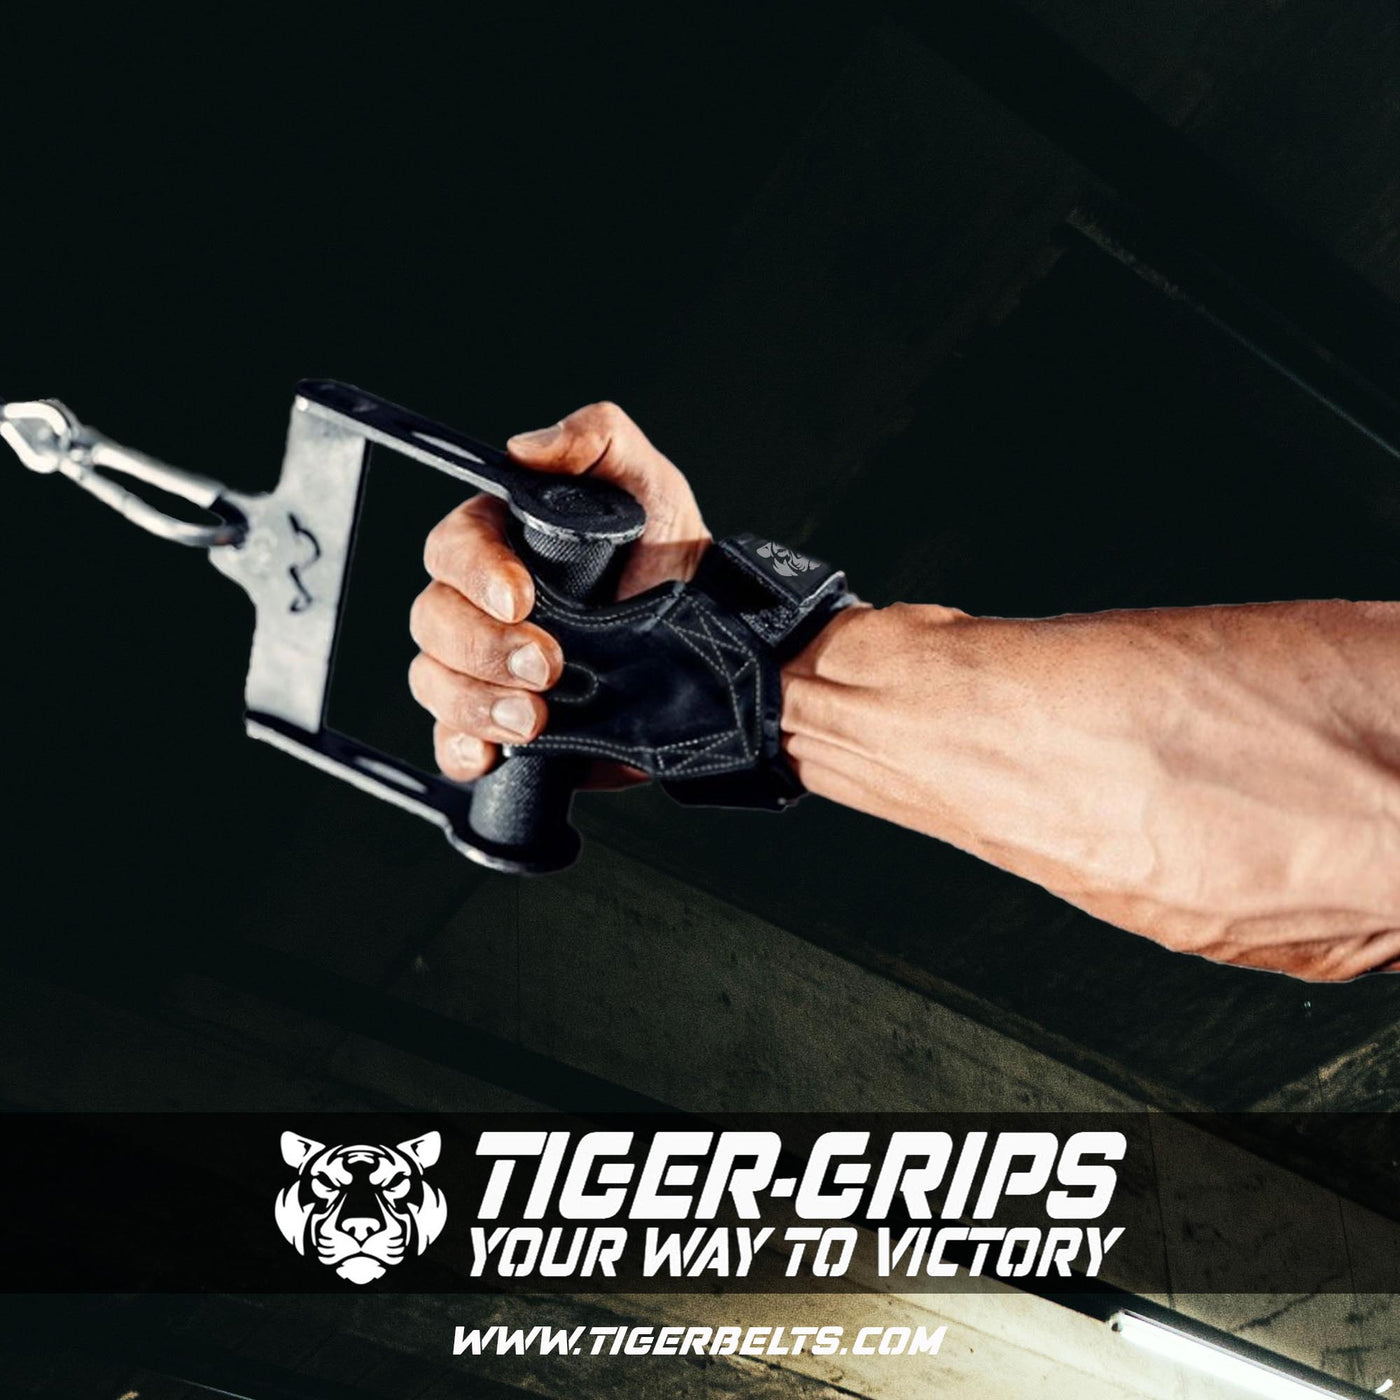 Tiger Grips TG-001 Lifting straps